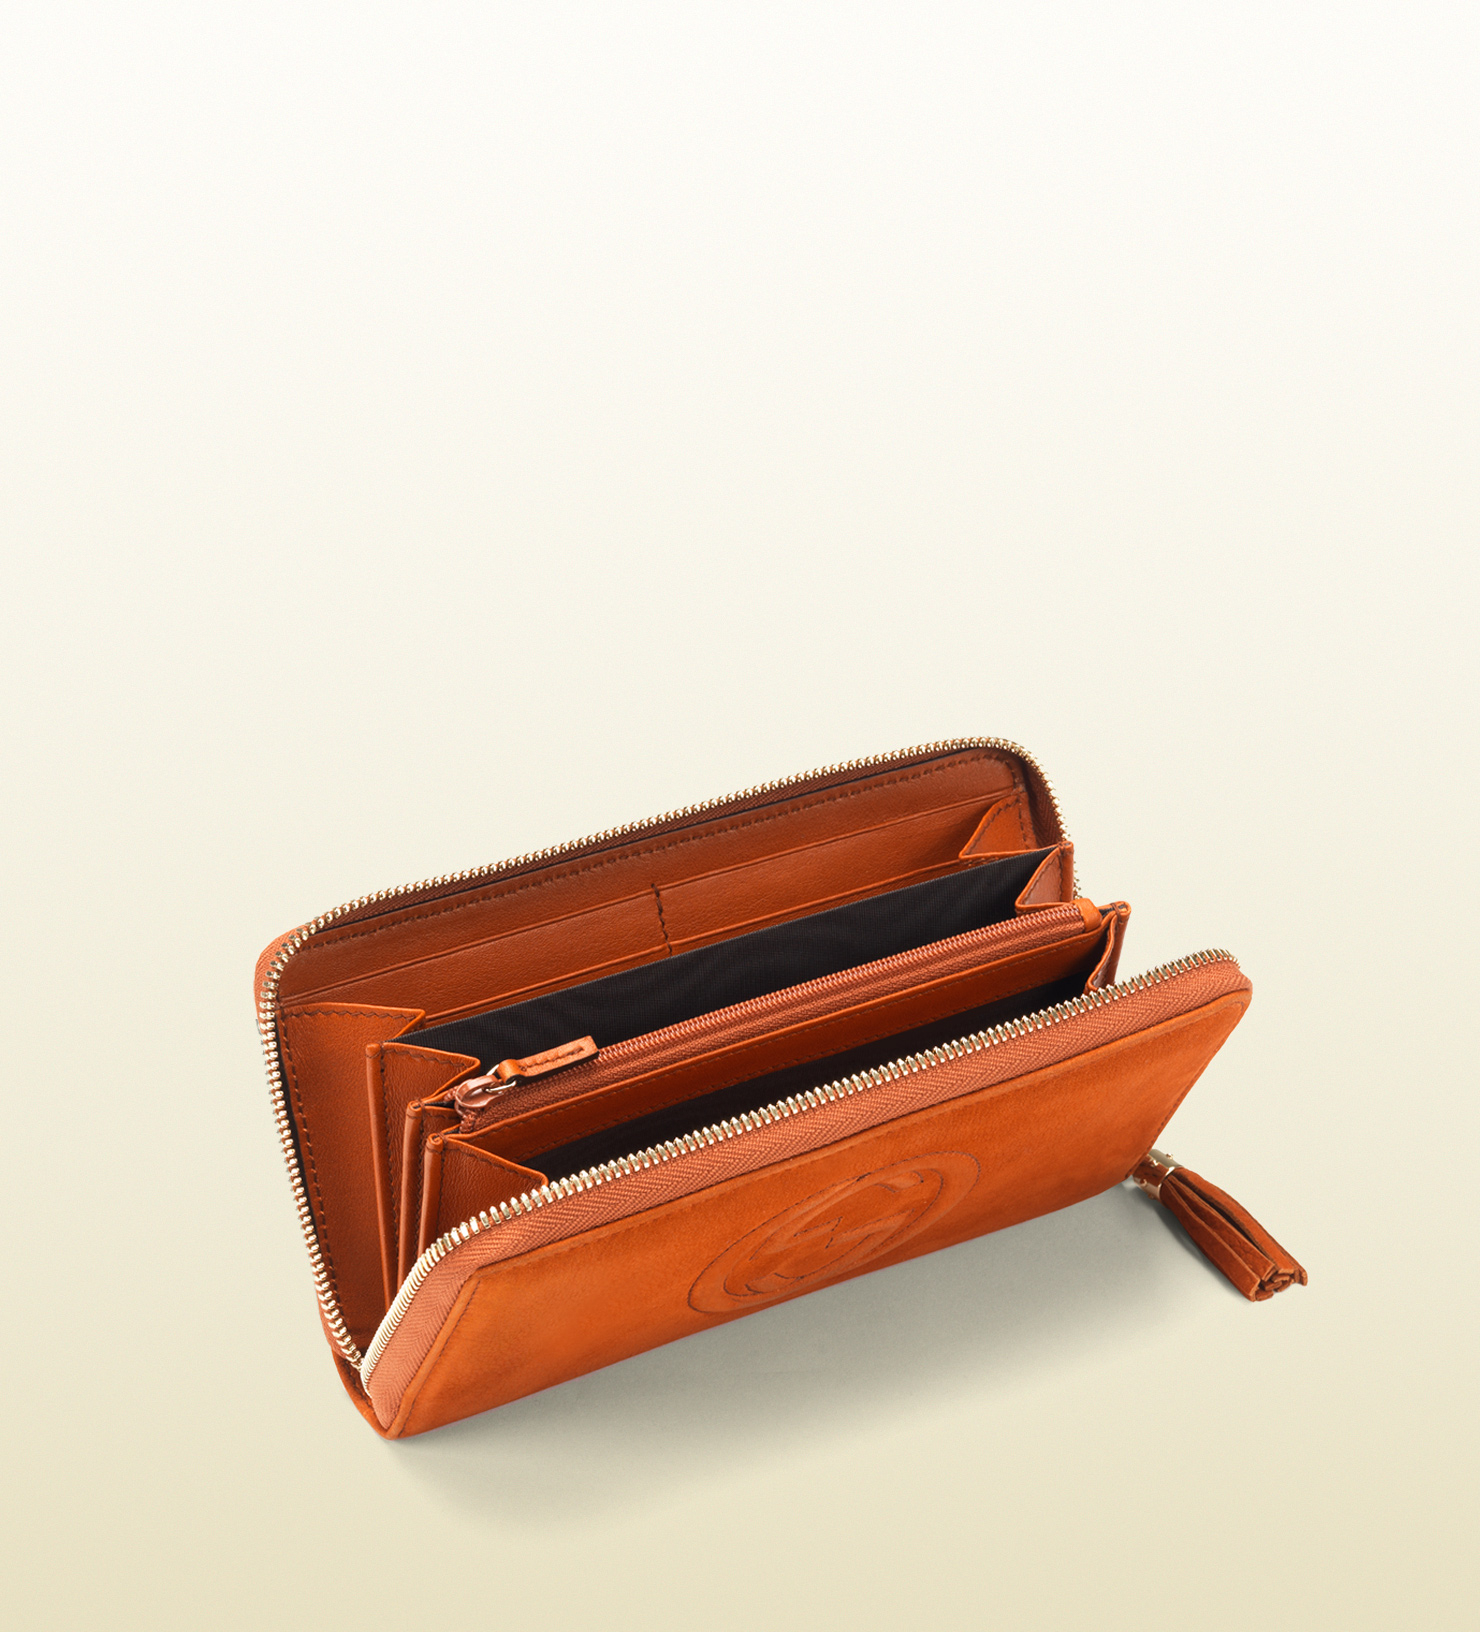 Gucci Soho Nubuck Leather Zip Around Wallet in Orange for Men - Lyst